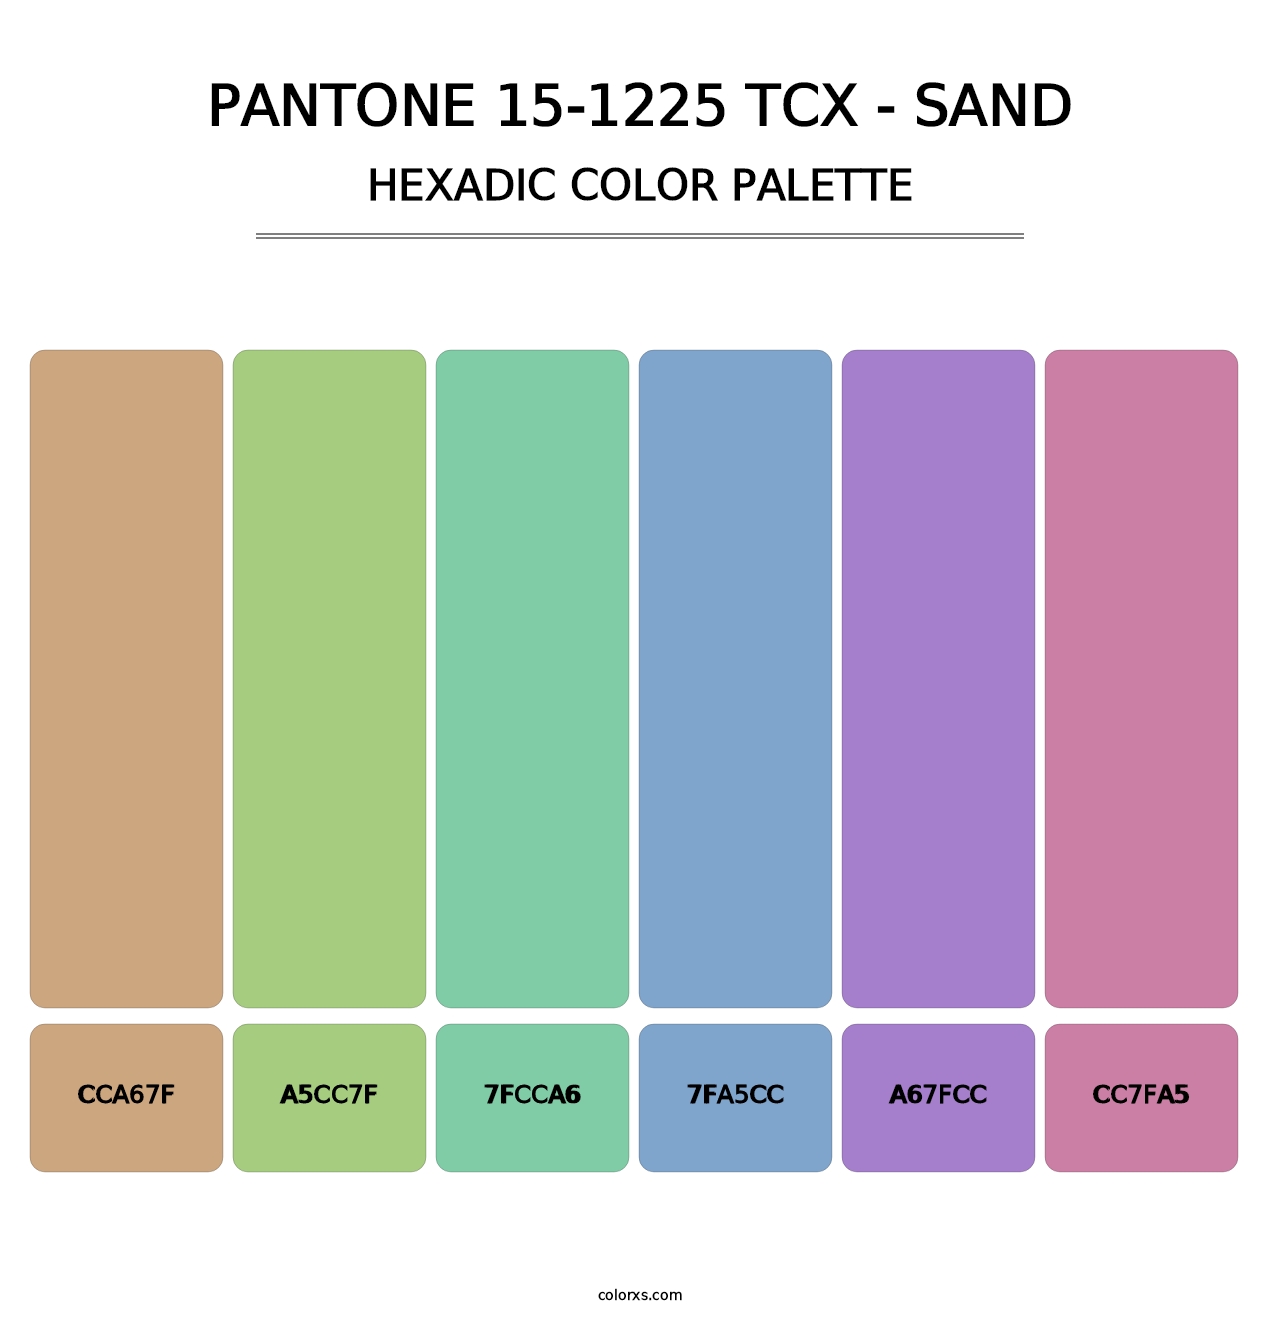 PANTONE 15-1225 TCX - Sand - Hexadic Color Palette